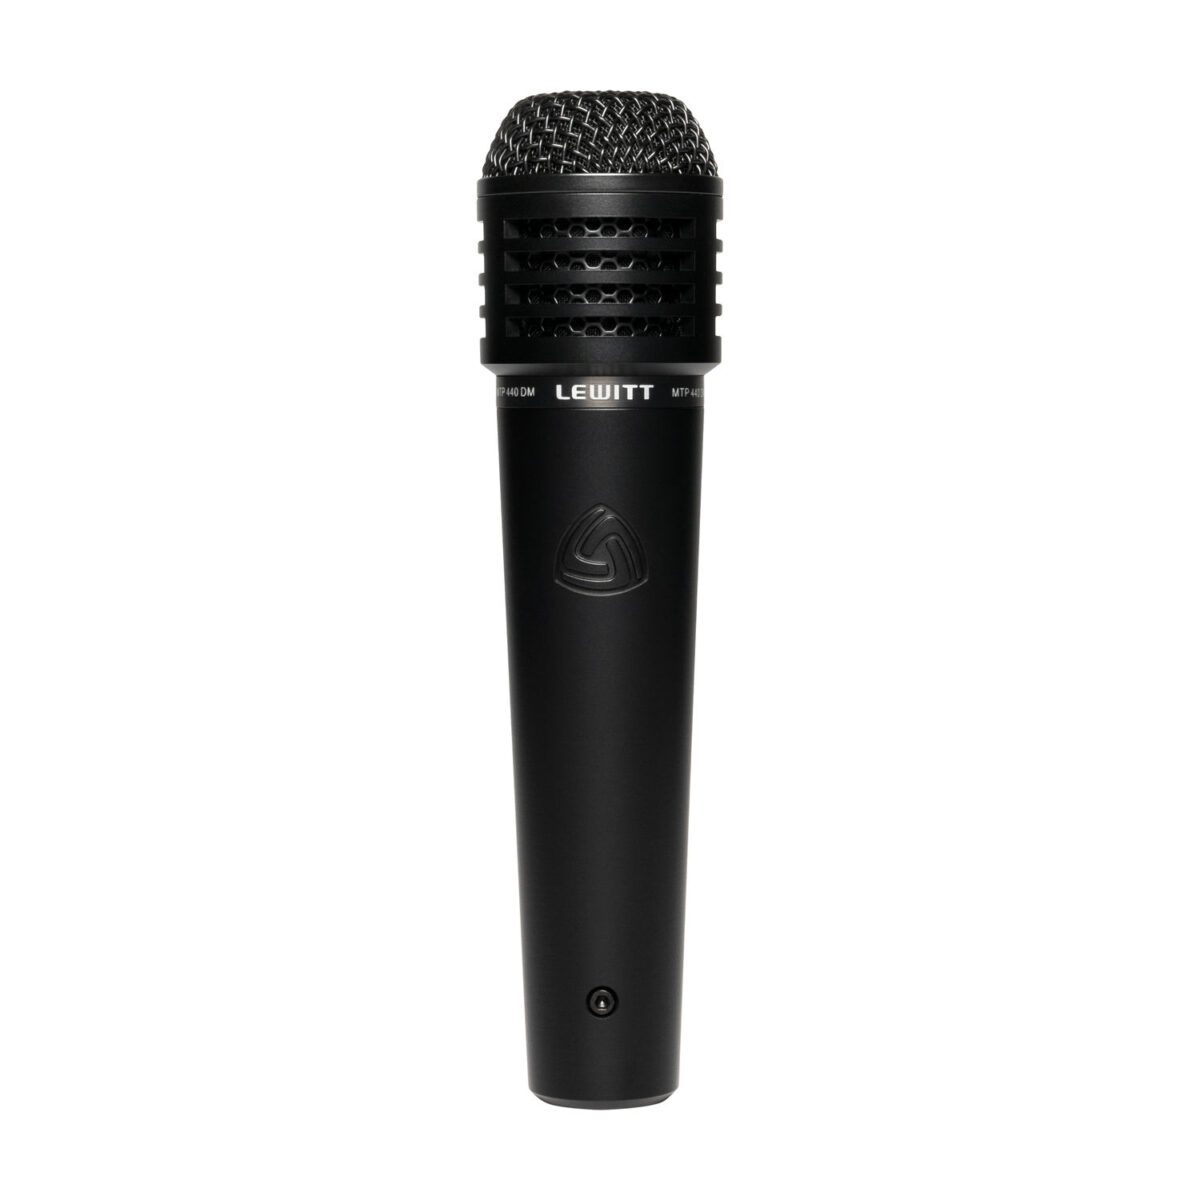 Lewitt MTP 440 DM Handheld Dynamic Microphone